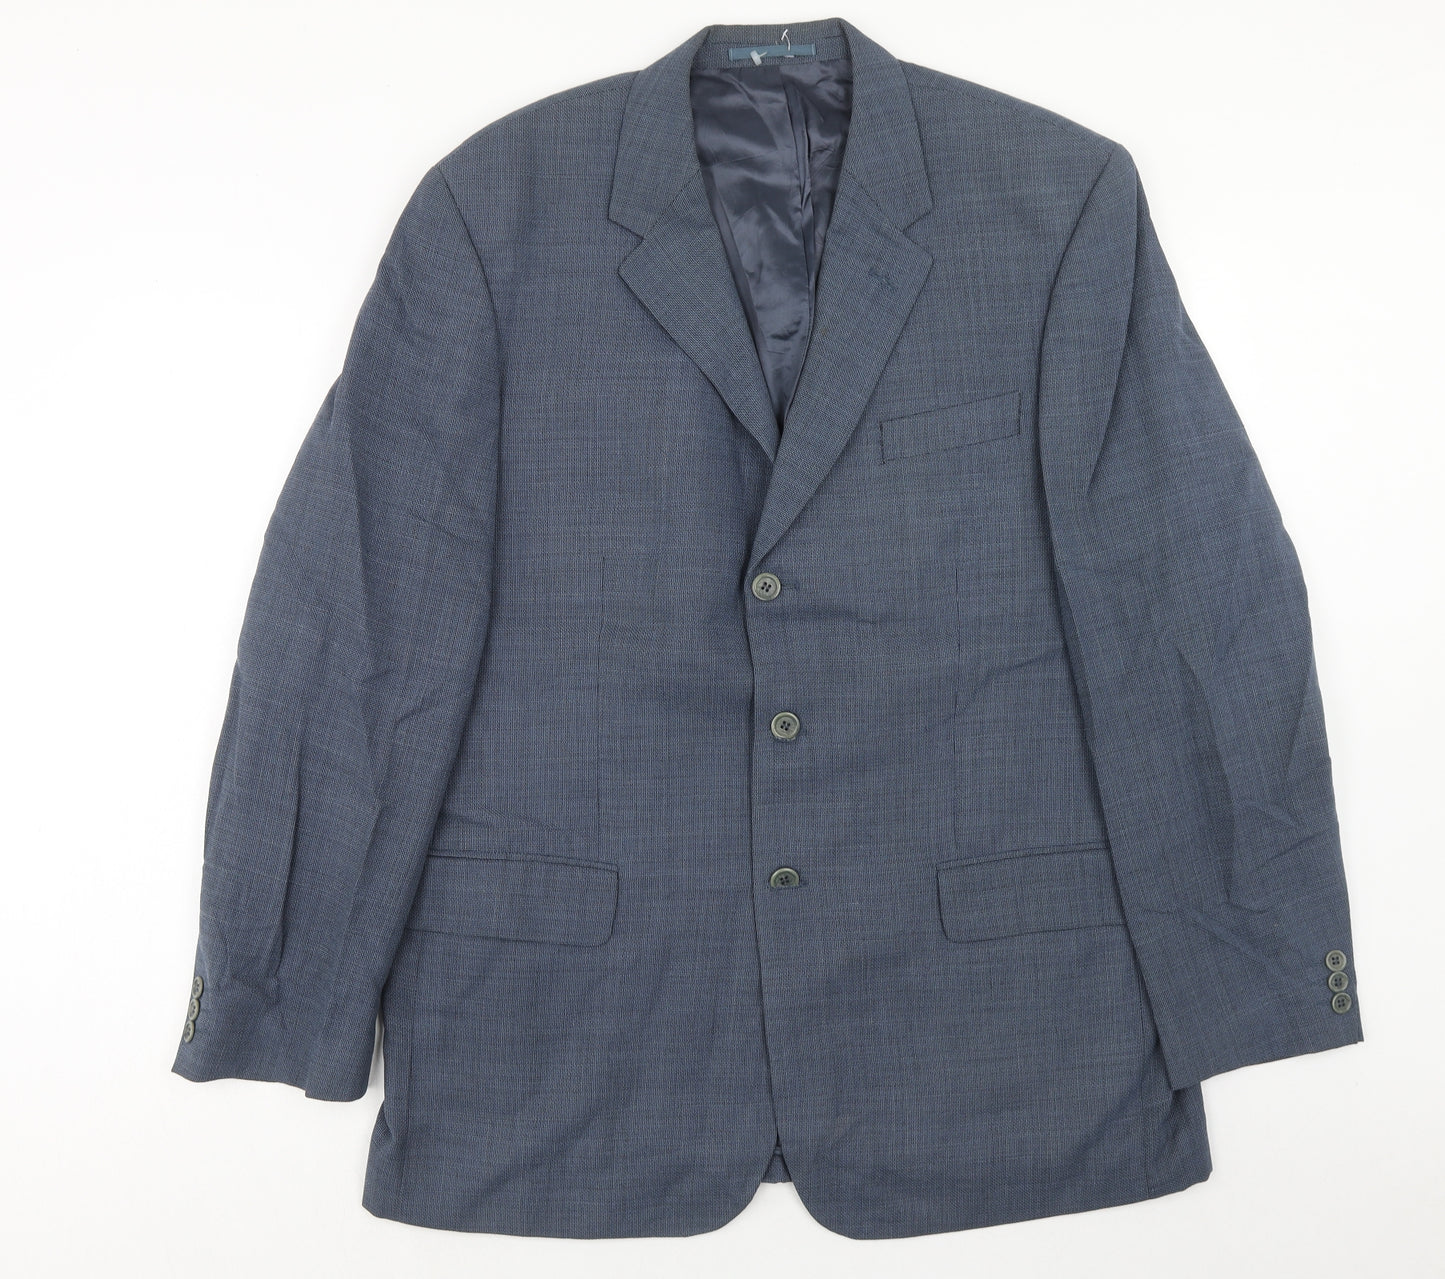 Ultimo Mens Blue Wool Jacket Suit Jacket Size 44 Regular